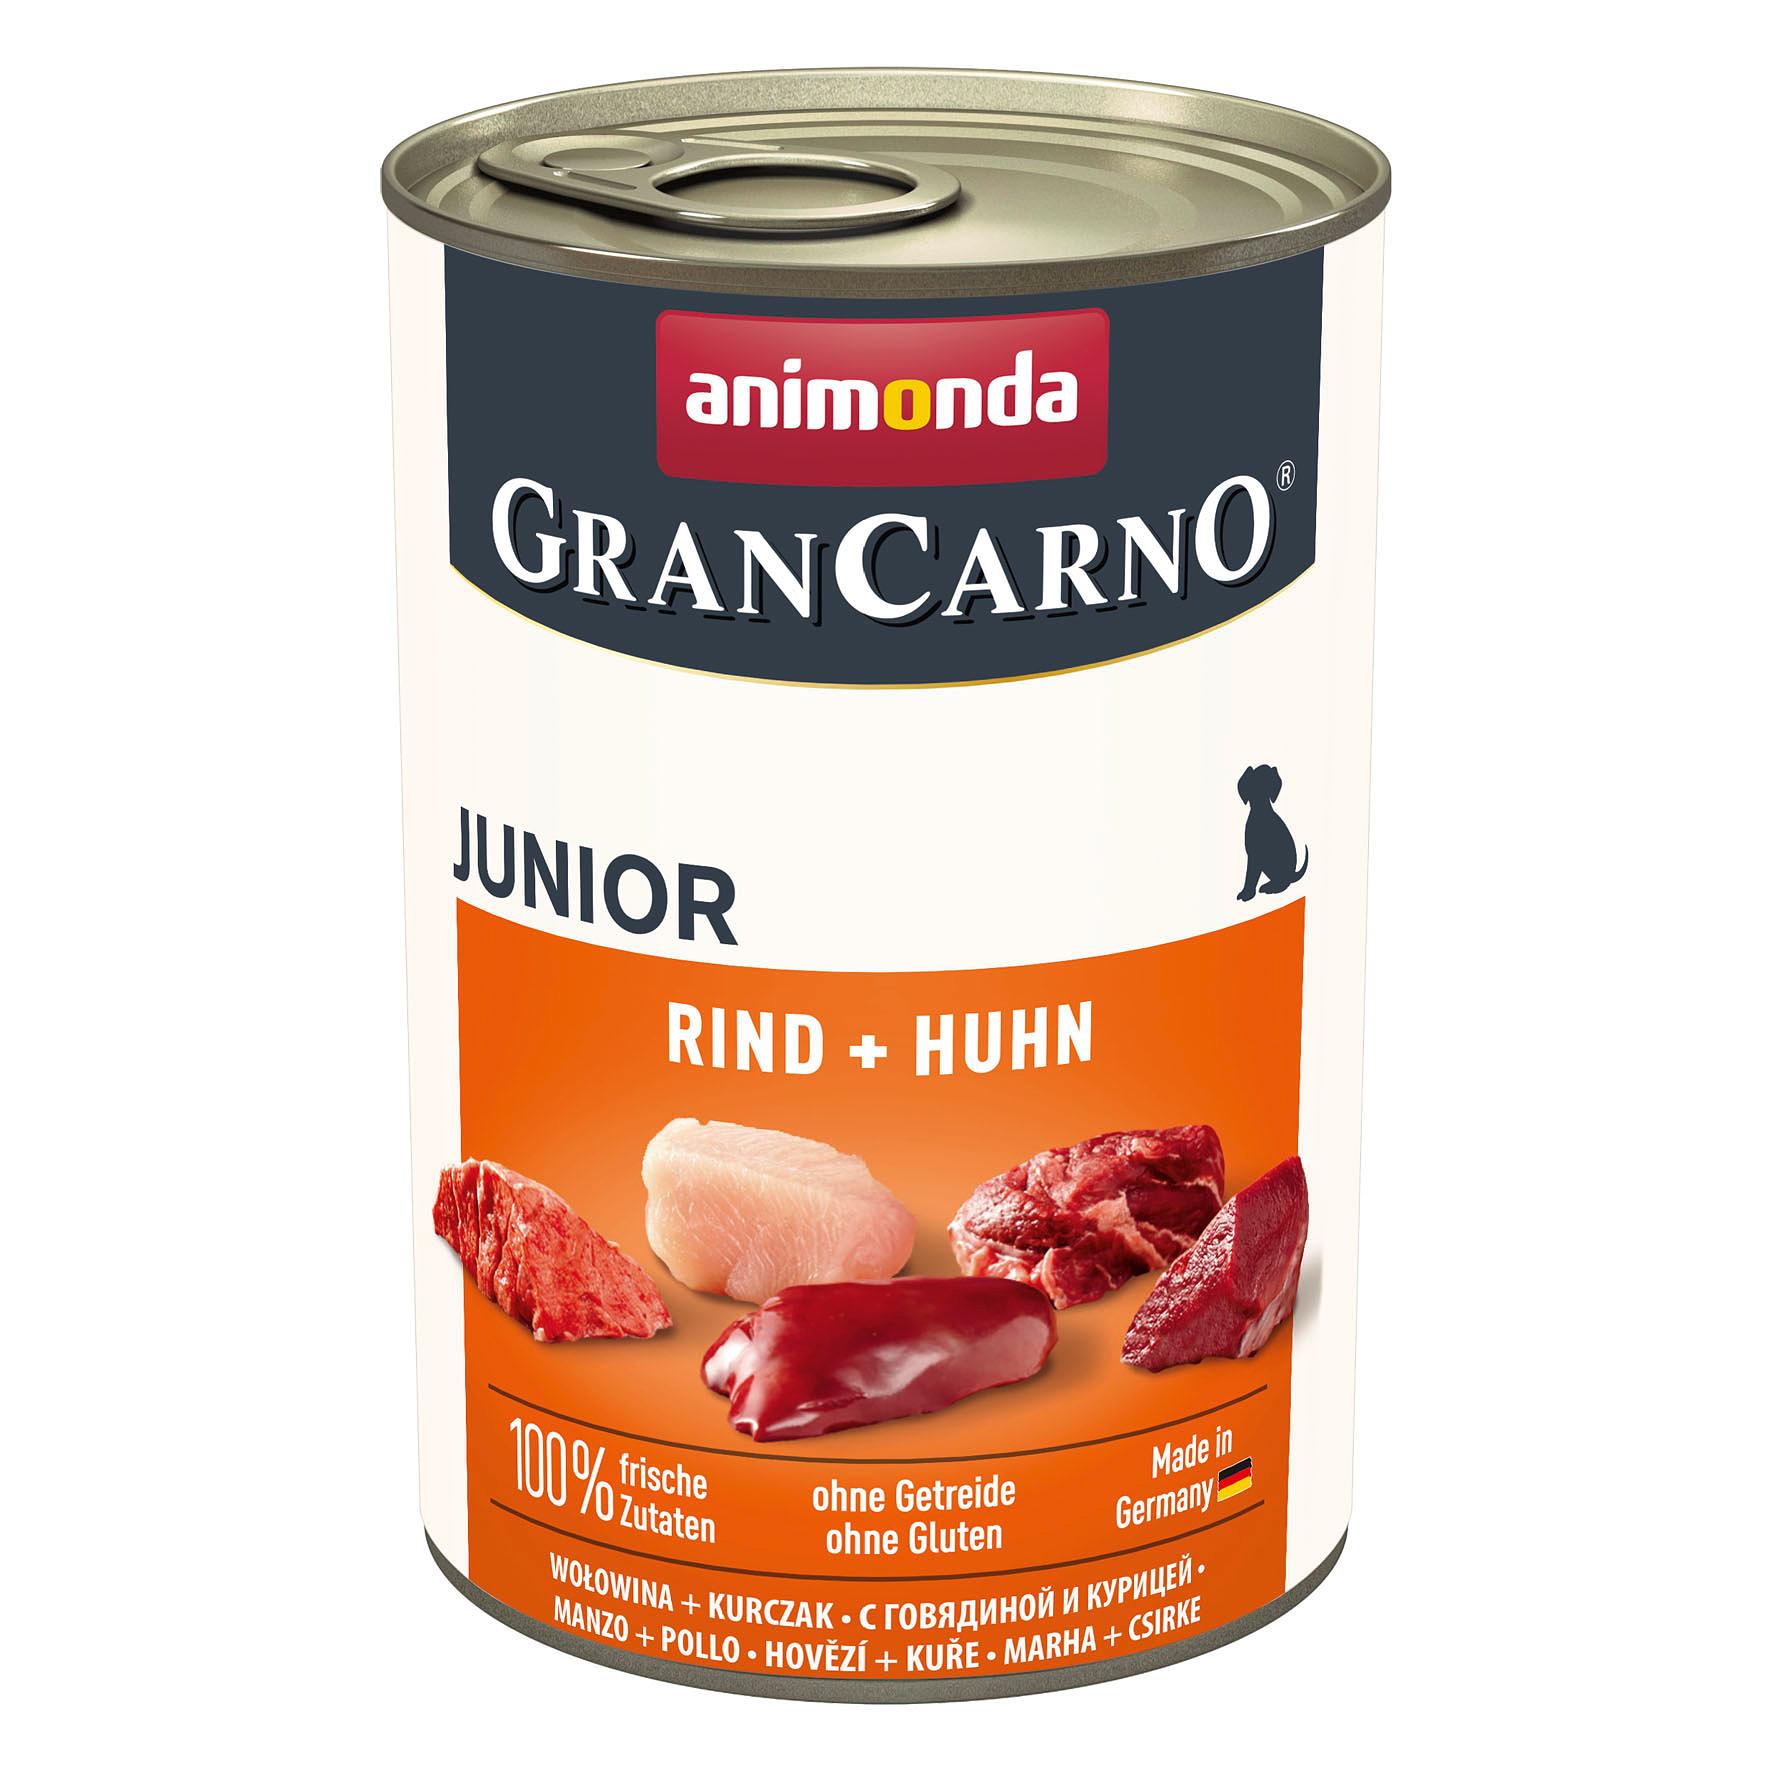 animonda GranCarno Junior bœuf et poulet, 400g